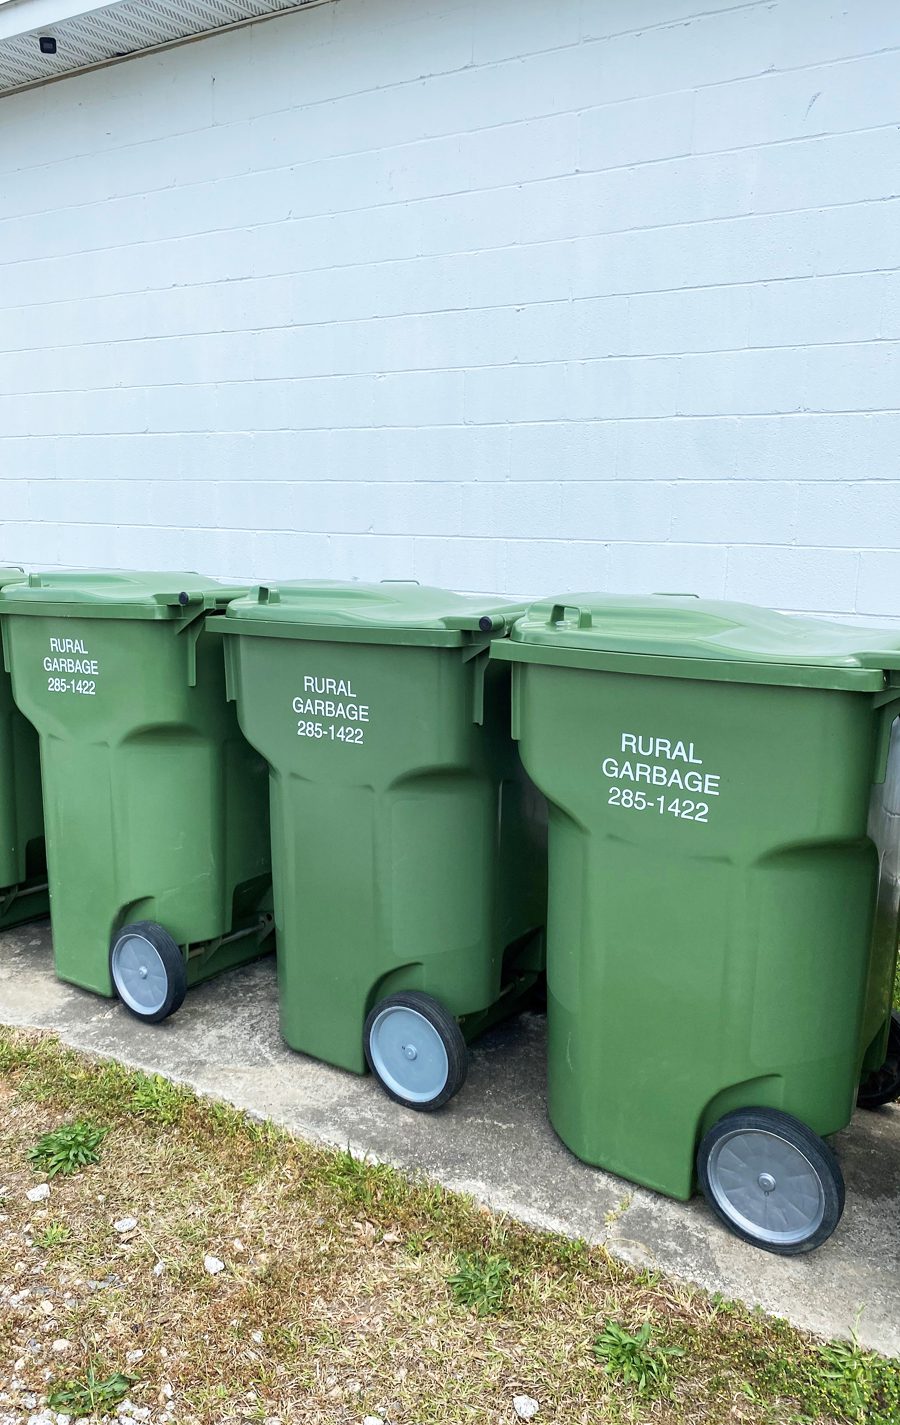 rural-garbage-service-green-garbage-bins-official